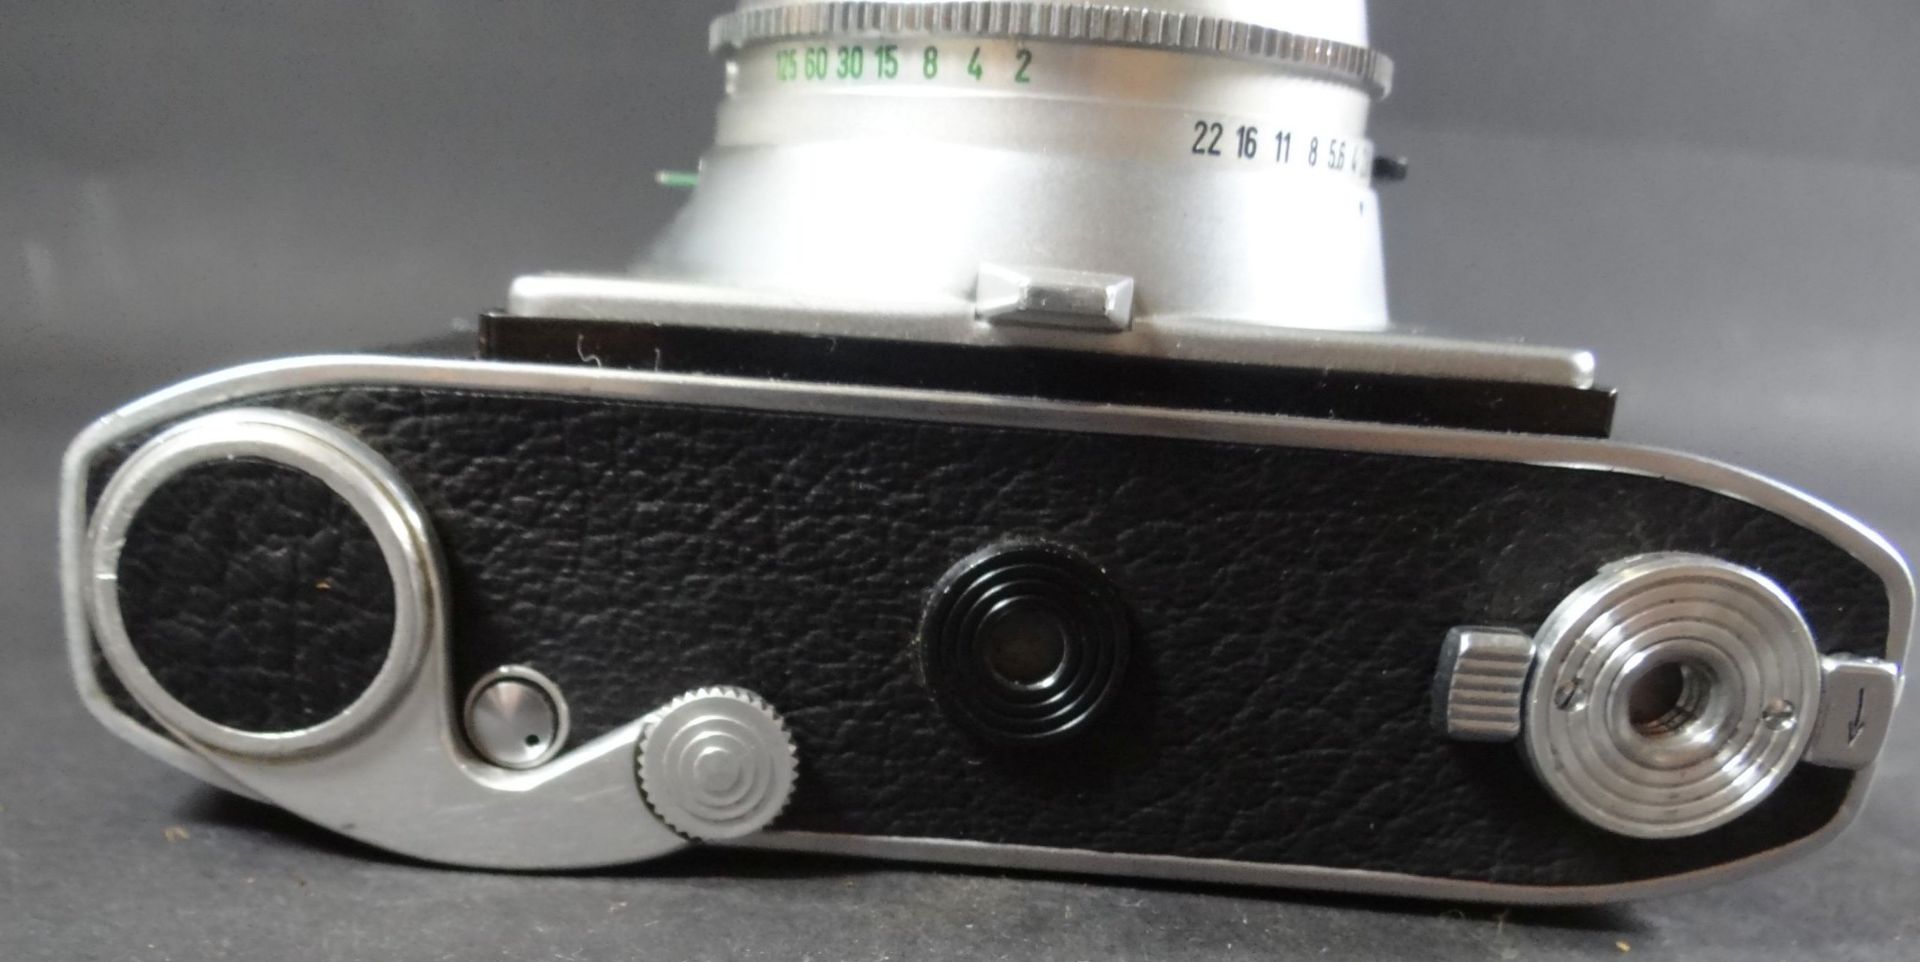 Kamera "Kodak" Retina IIB, gute Erhayltung - Bild 3 aus 5